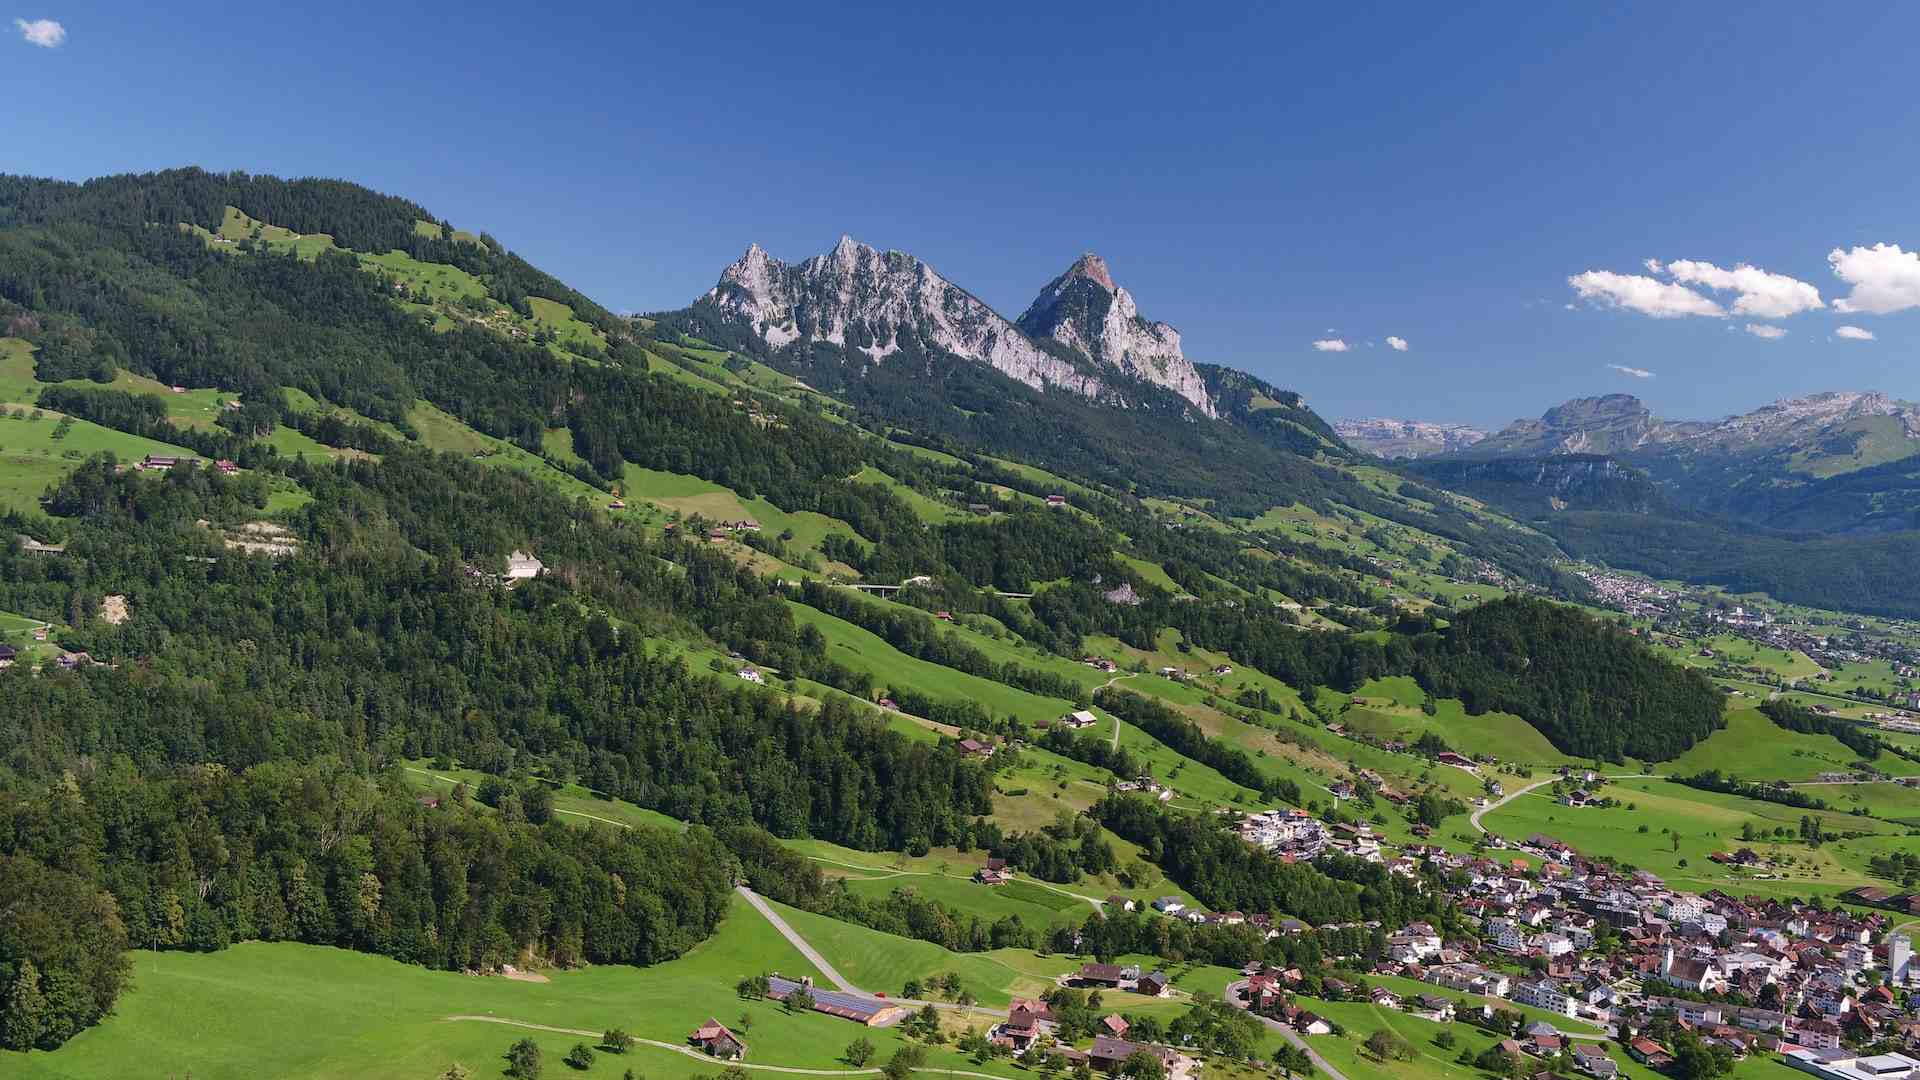 Biohof Mettli, producer in Rickenbach canton of Schwyz in Switzerland